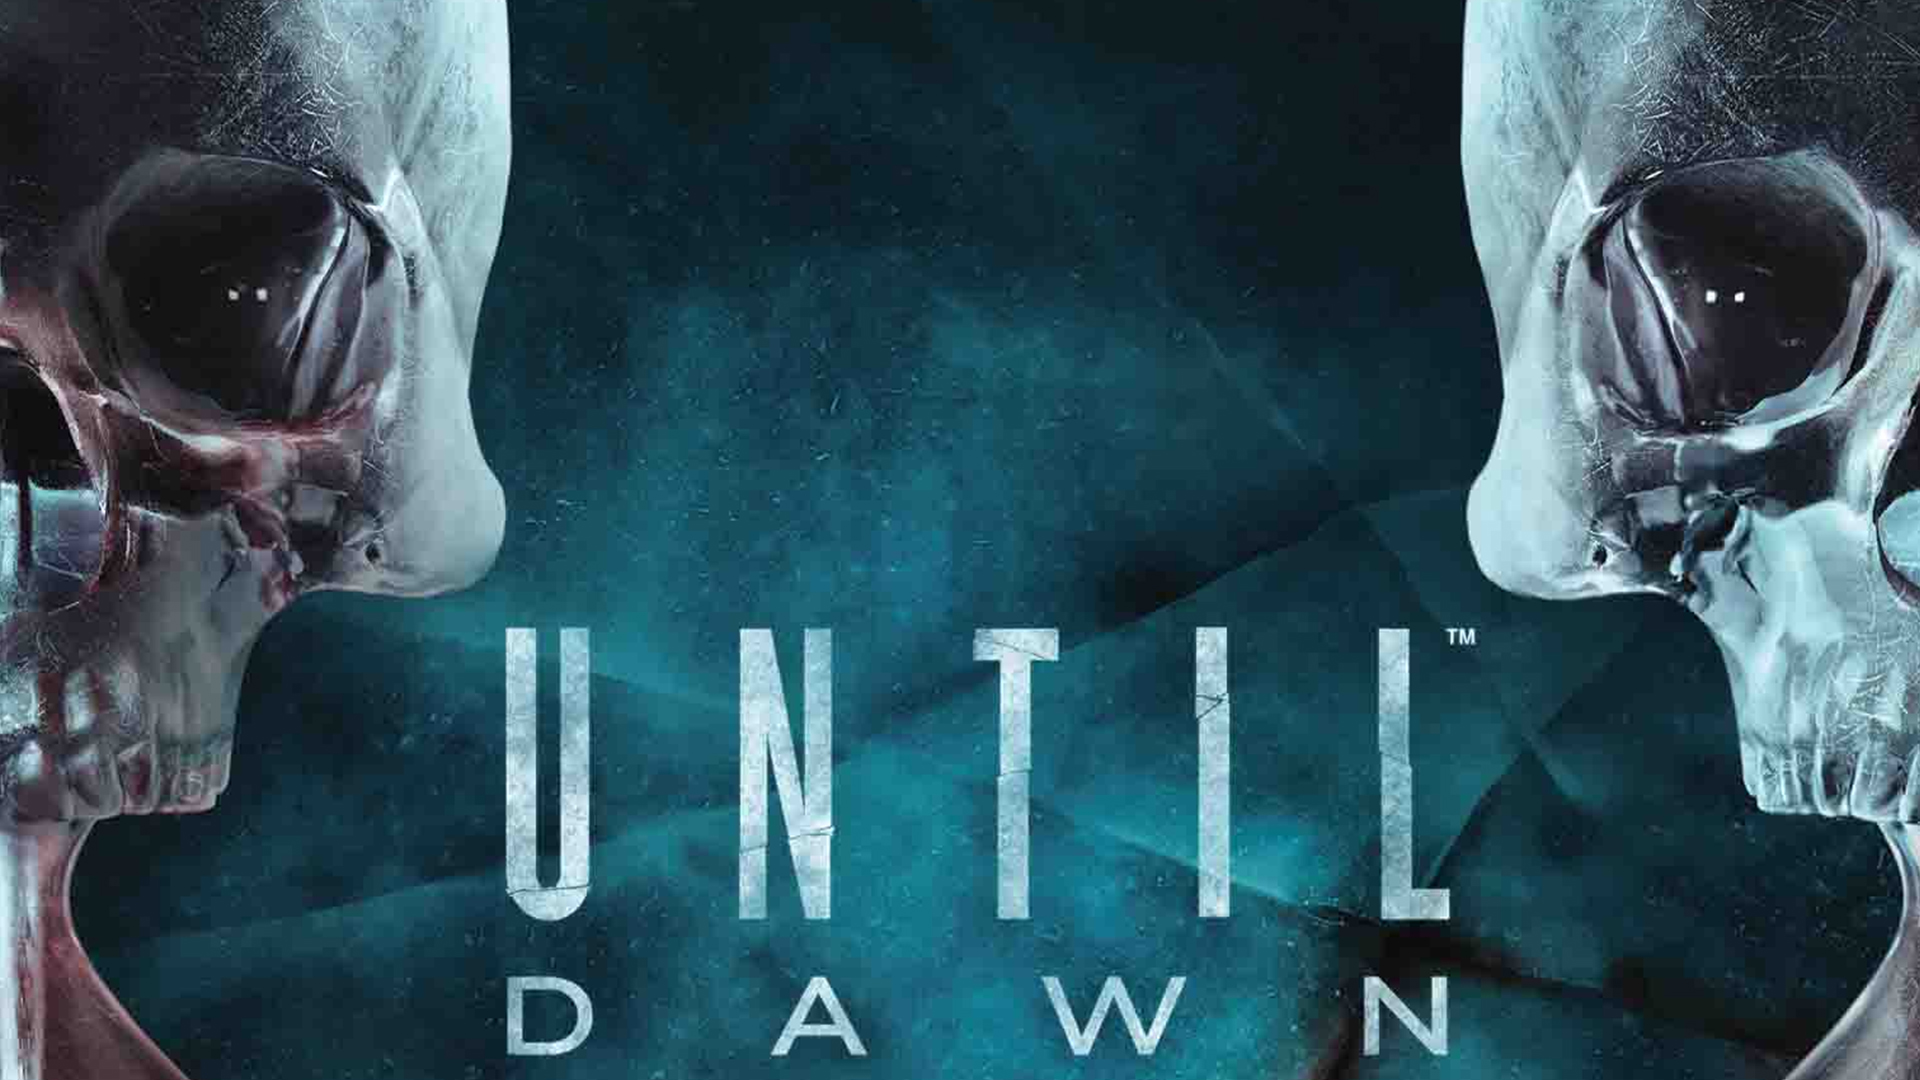 until dawn pc download